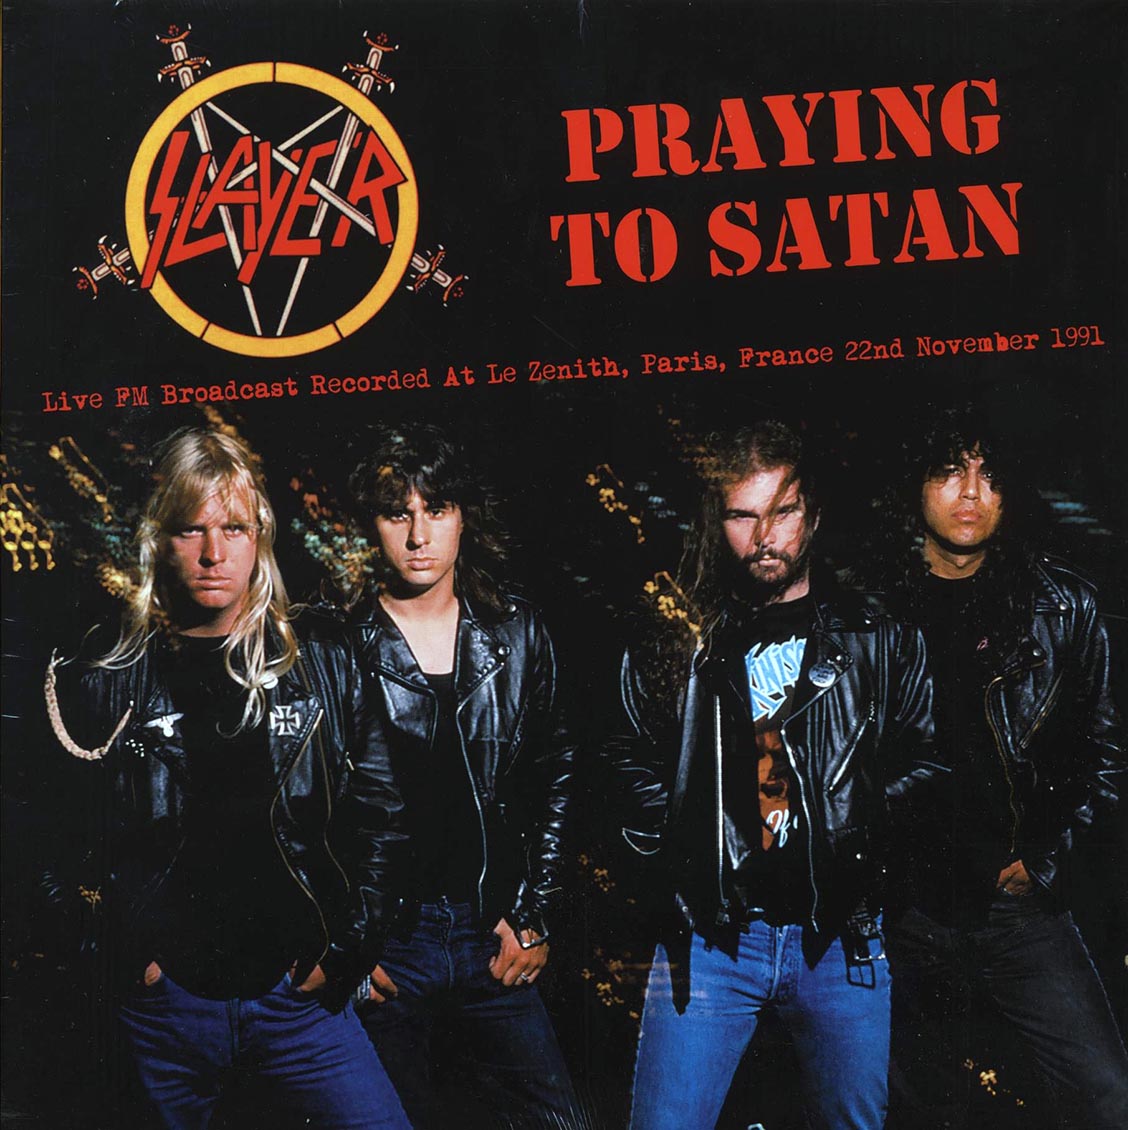 Slayer - Praying To Satan: Broadcast Recorded At Le Zenith, Paris, France 22nd November 1991 (ltd. 500 copies made) - Vinyl LP